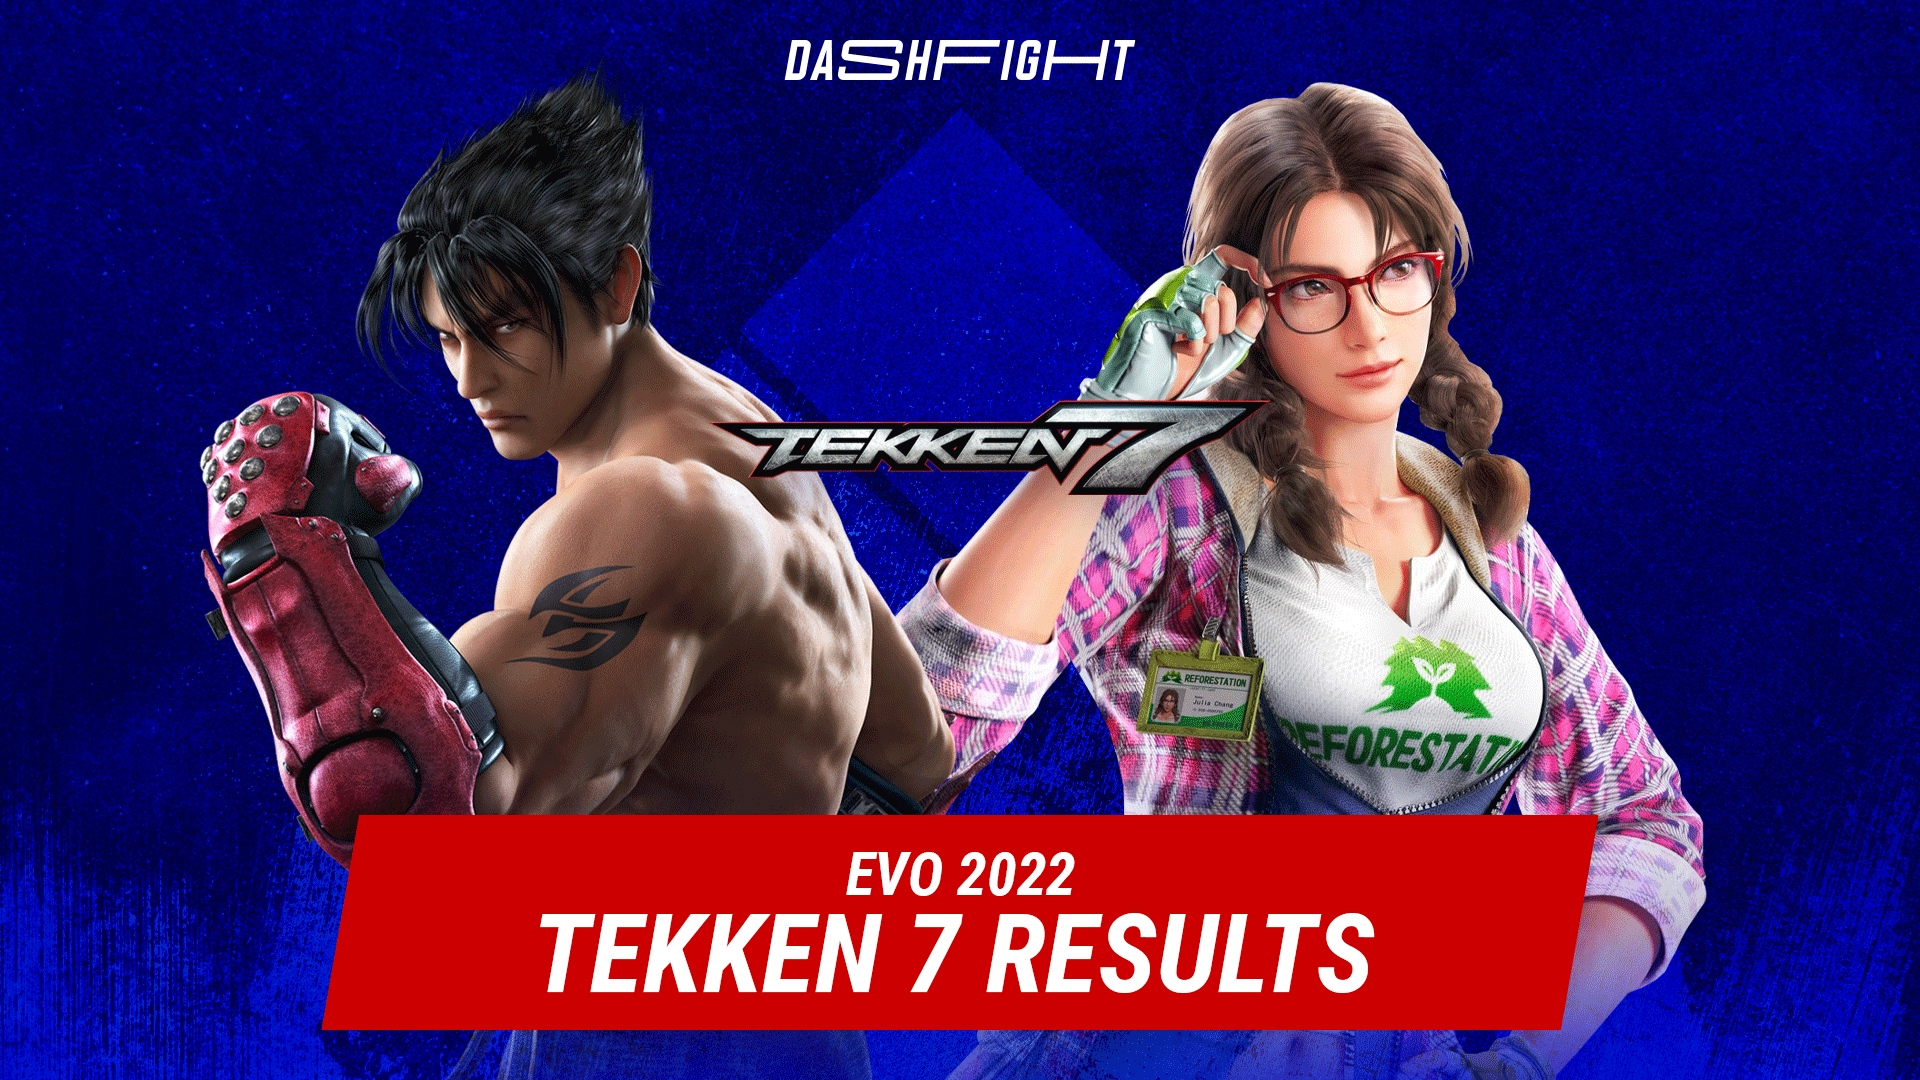 Evo 2022 Tekken 7 Result - SOMETHING SOMETHING <- DONT FORGET TO REMOV